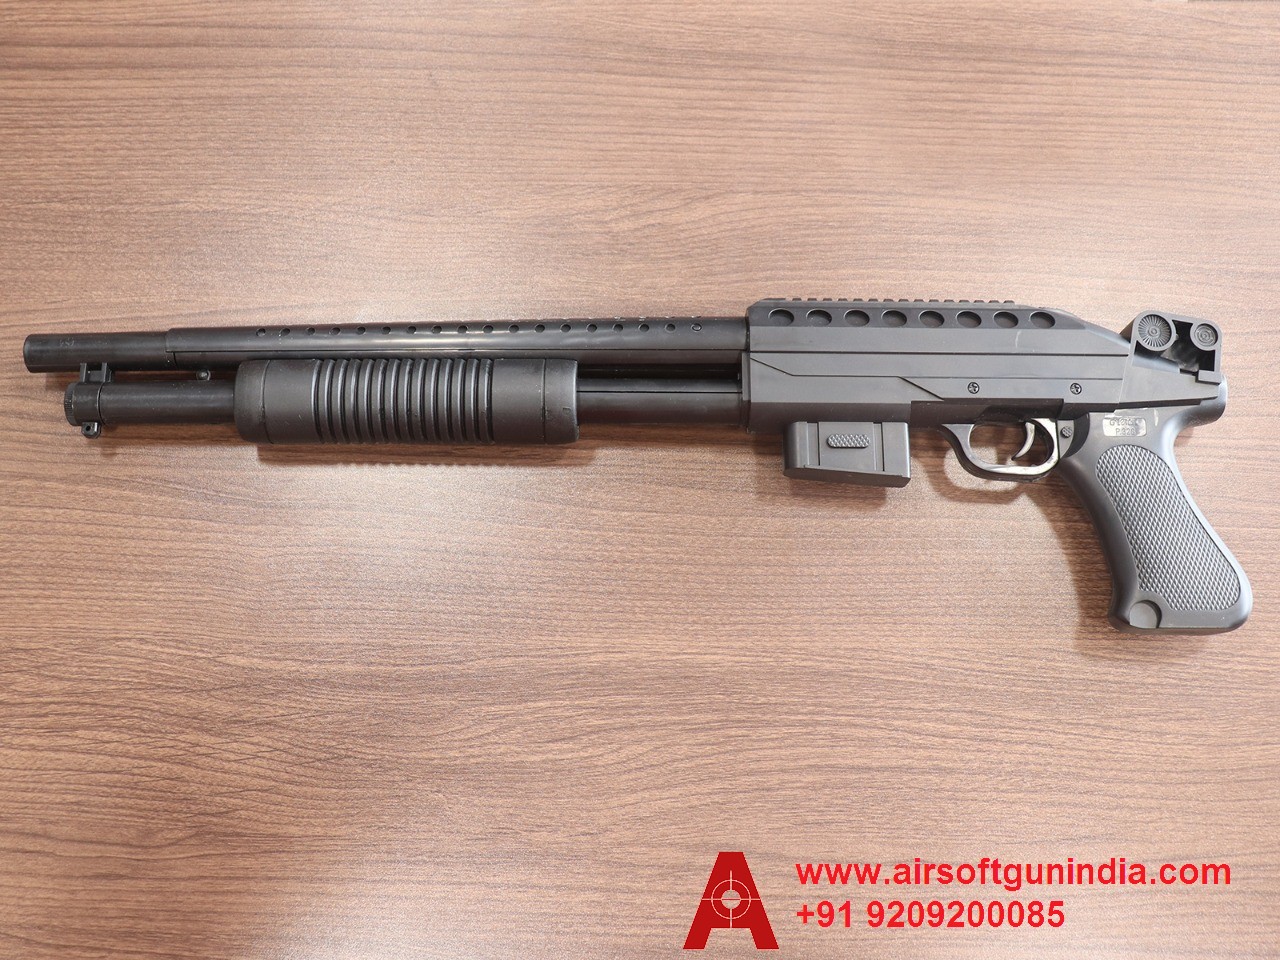 Pump Action Shot-Gun Black Edition Airsoft Toy By Airsoft Gun India